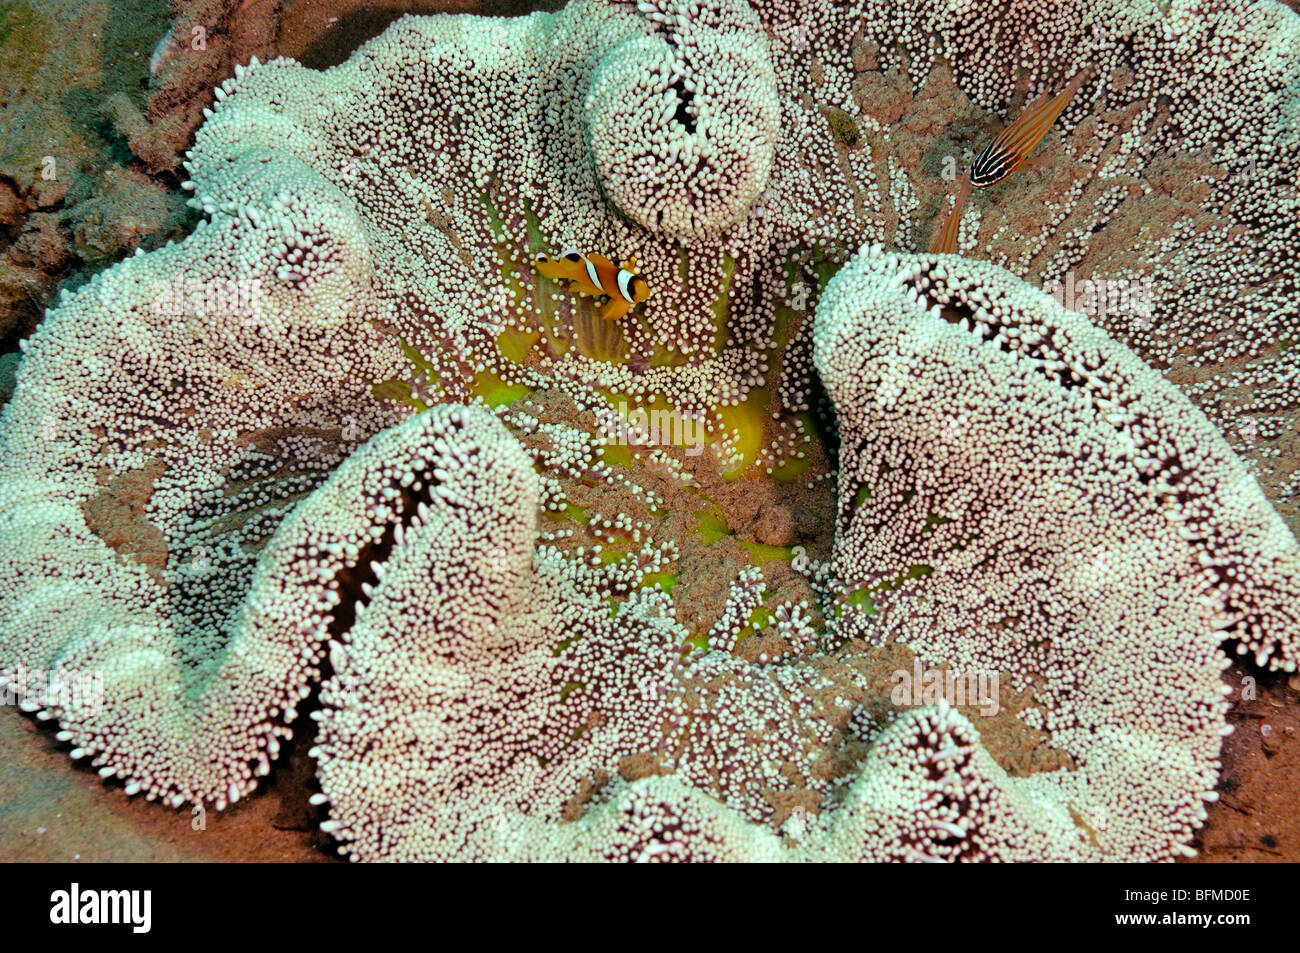 Haddon's anemone, Stichodactyla haddoni, with small Red Sea anemonefish, Amphiprion bicinctus. "Red Sea" Stock Photo